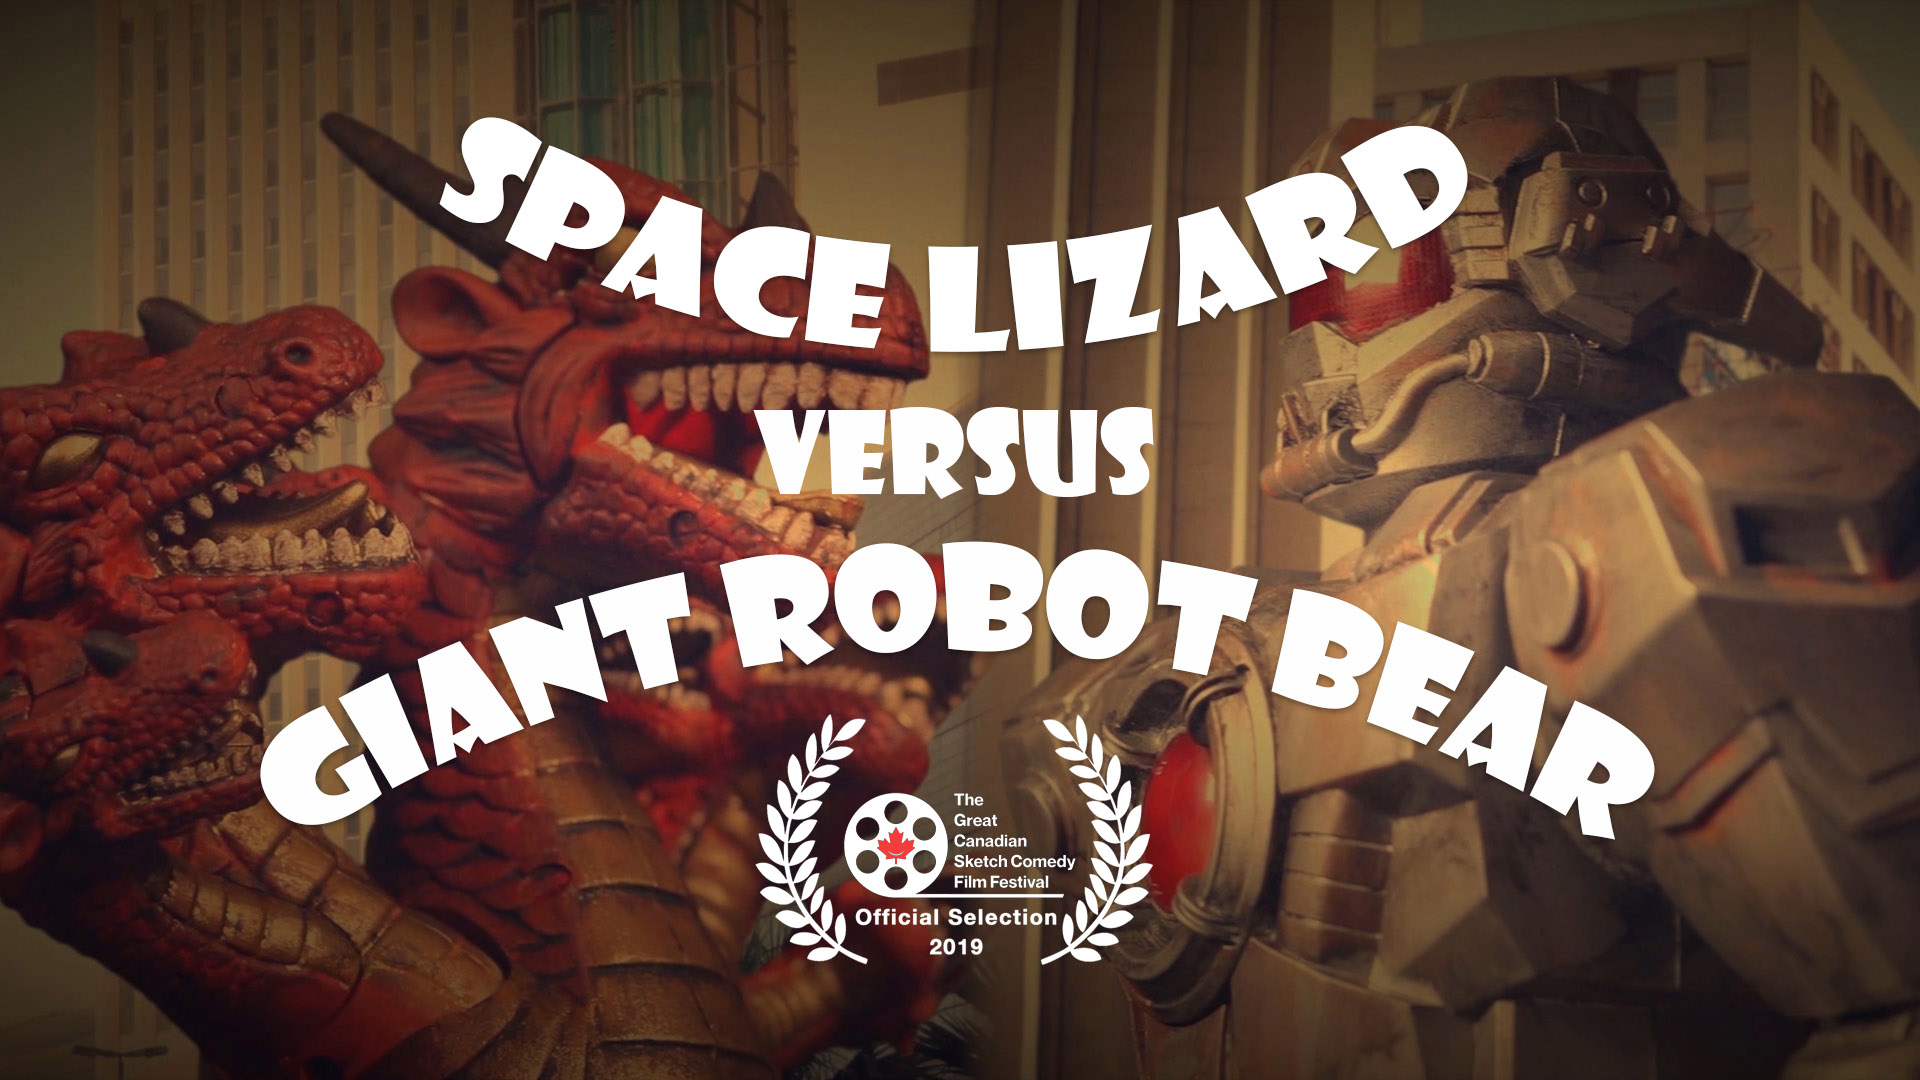 Space Lizard Versus Giant Robot Bear